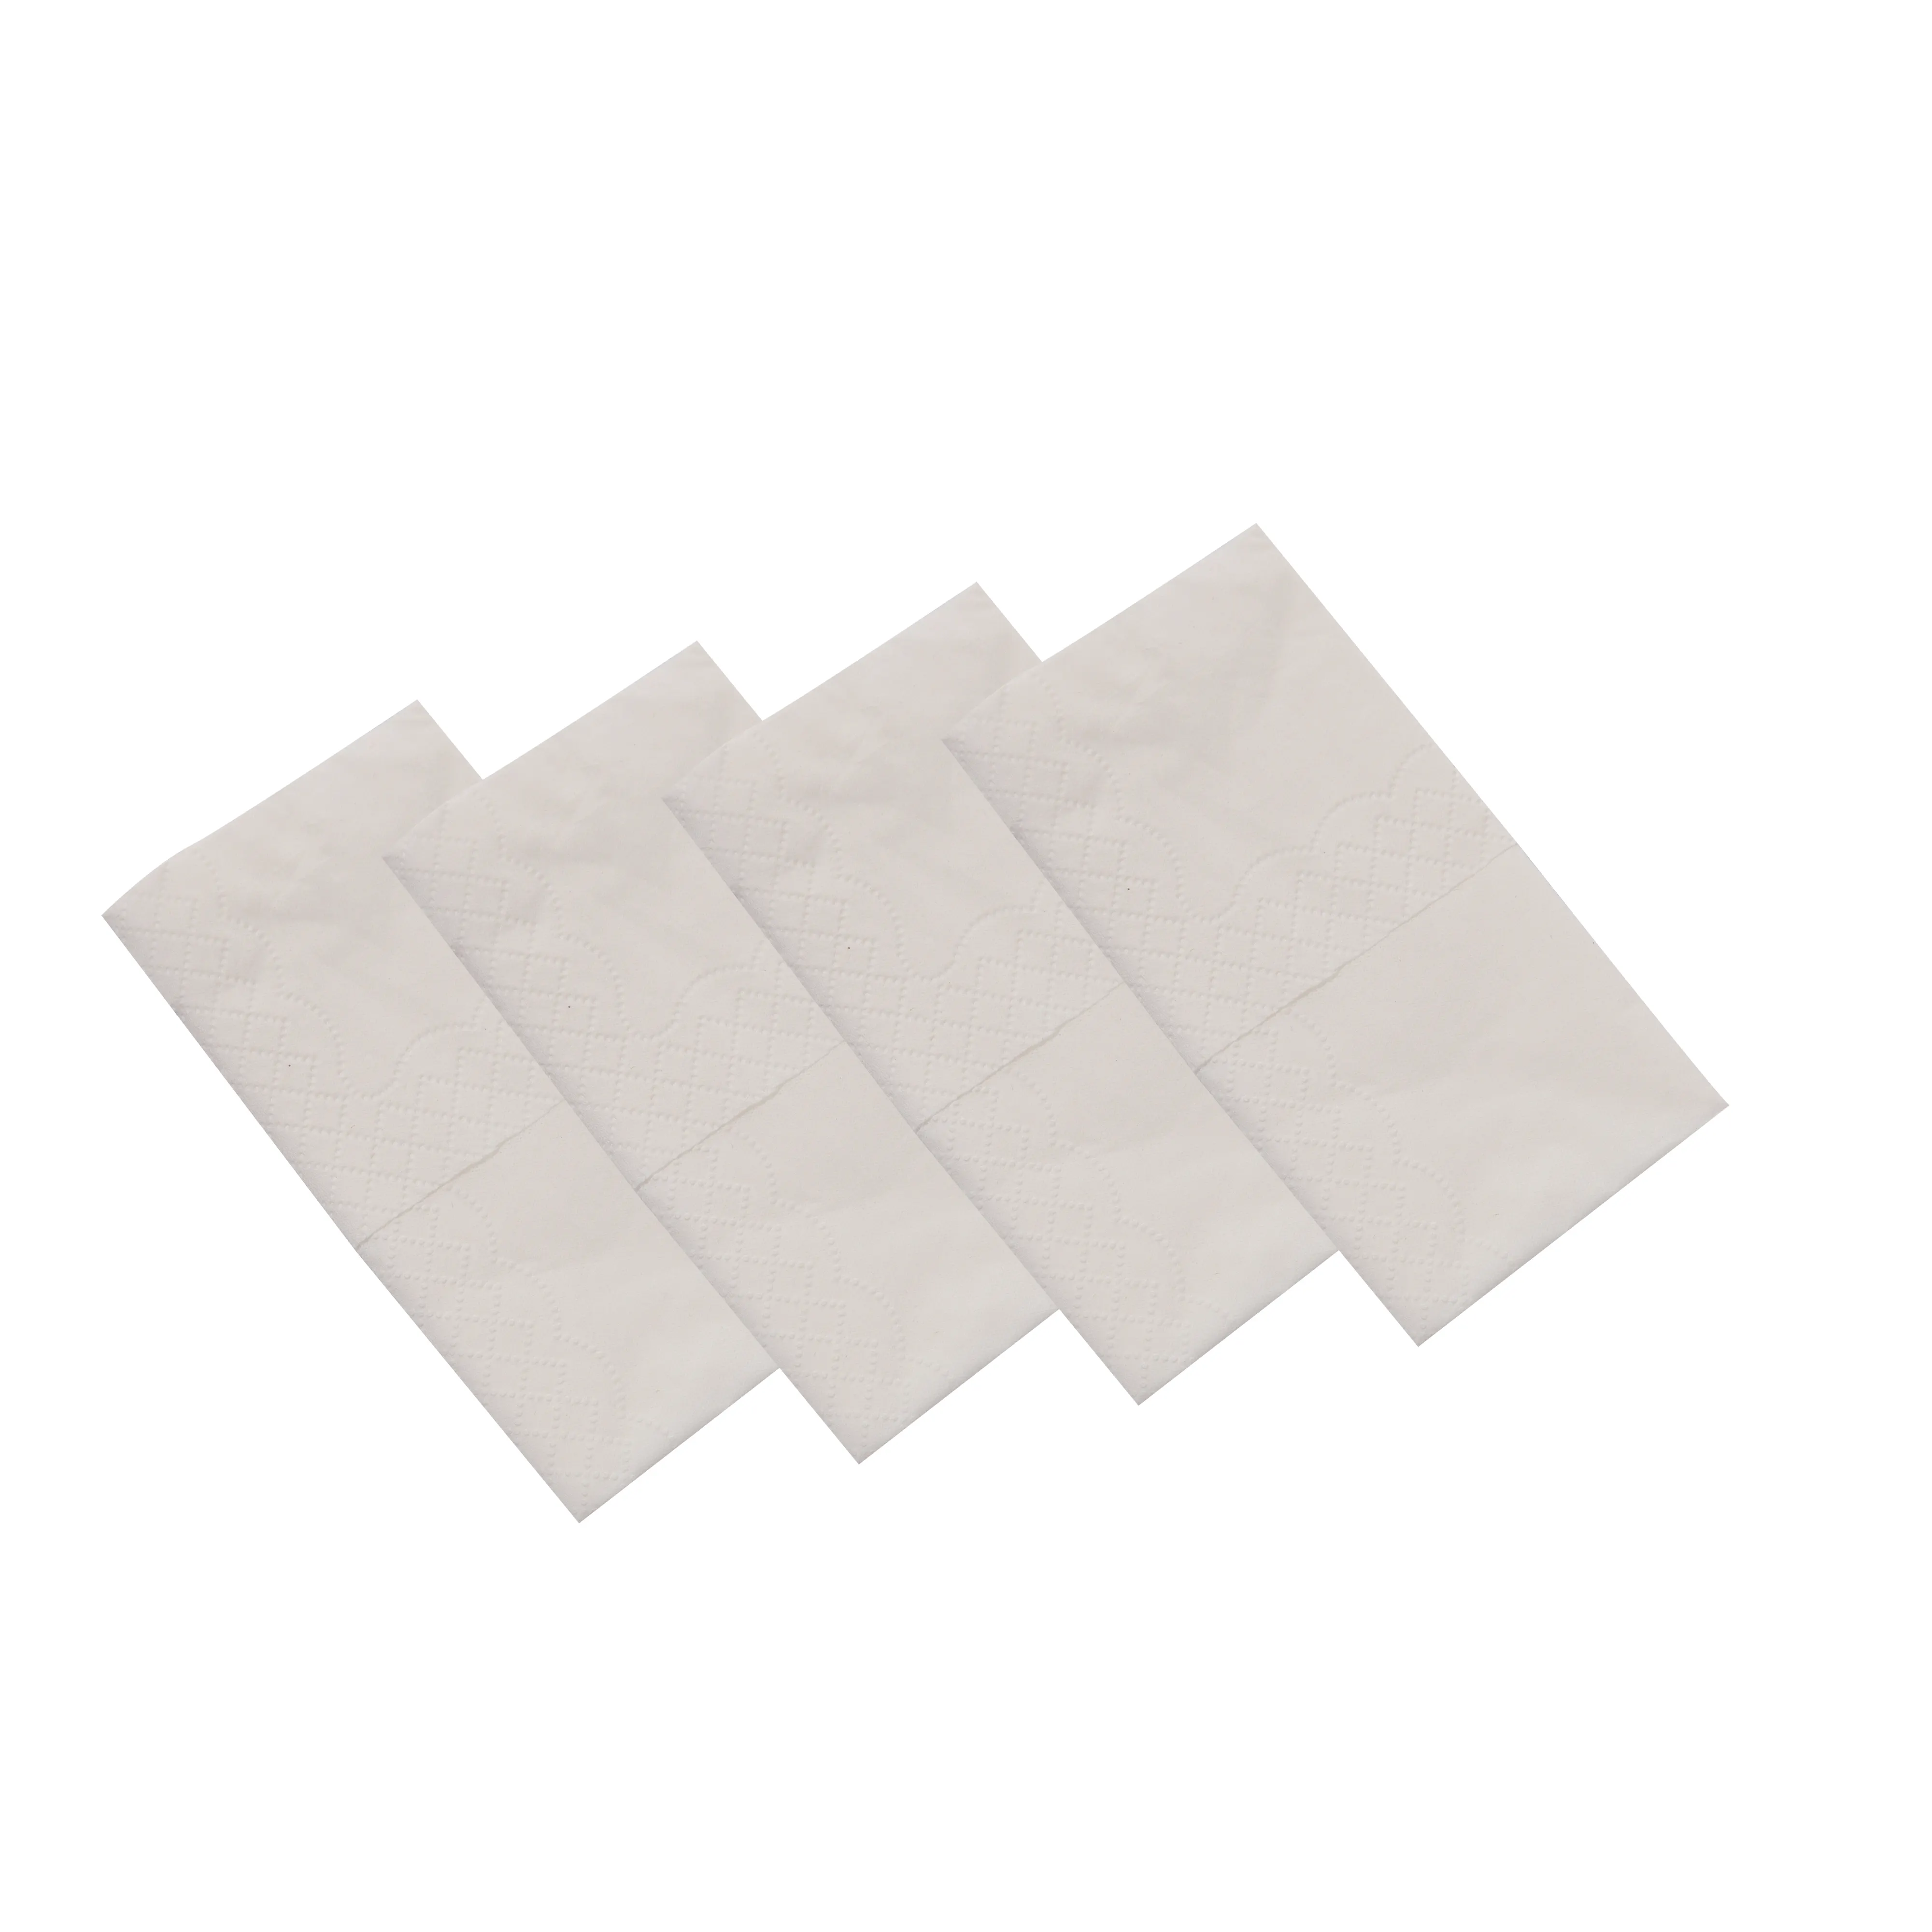 Pañuelo facial de bolsillo Mini de 3 capas blanco virgen de alta calidad personalizado